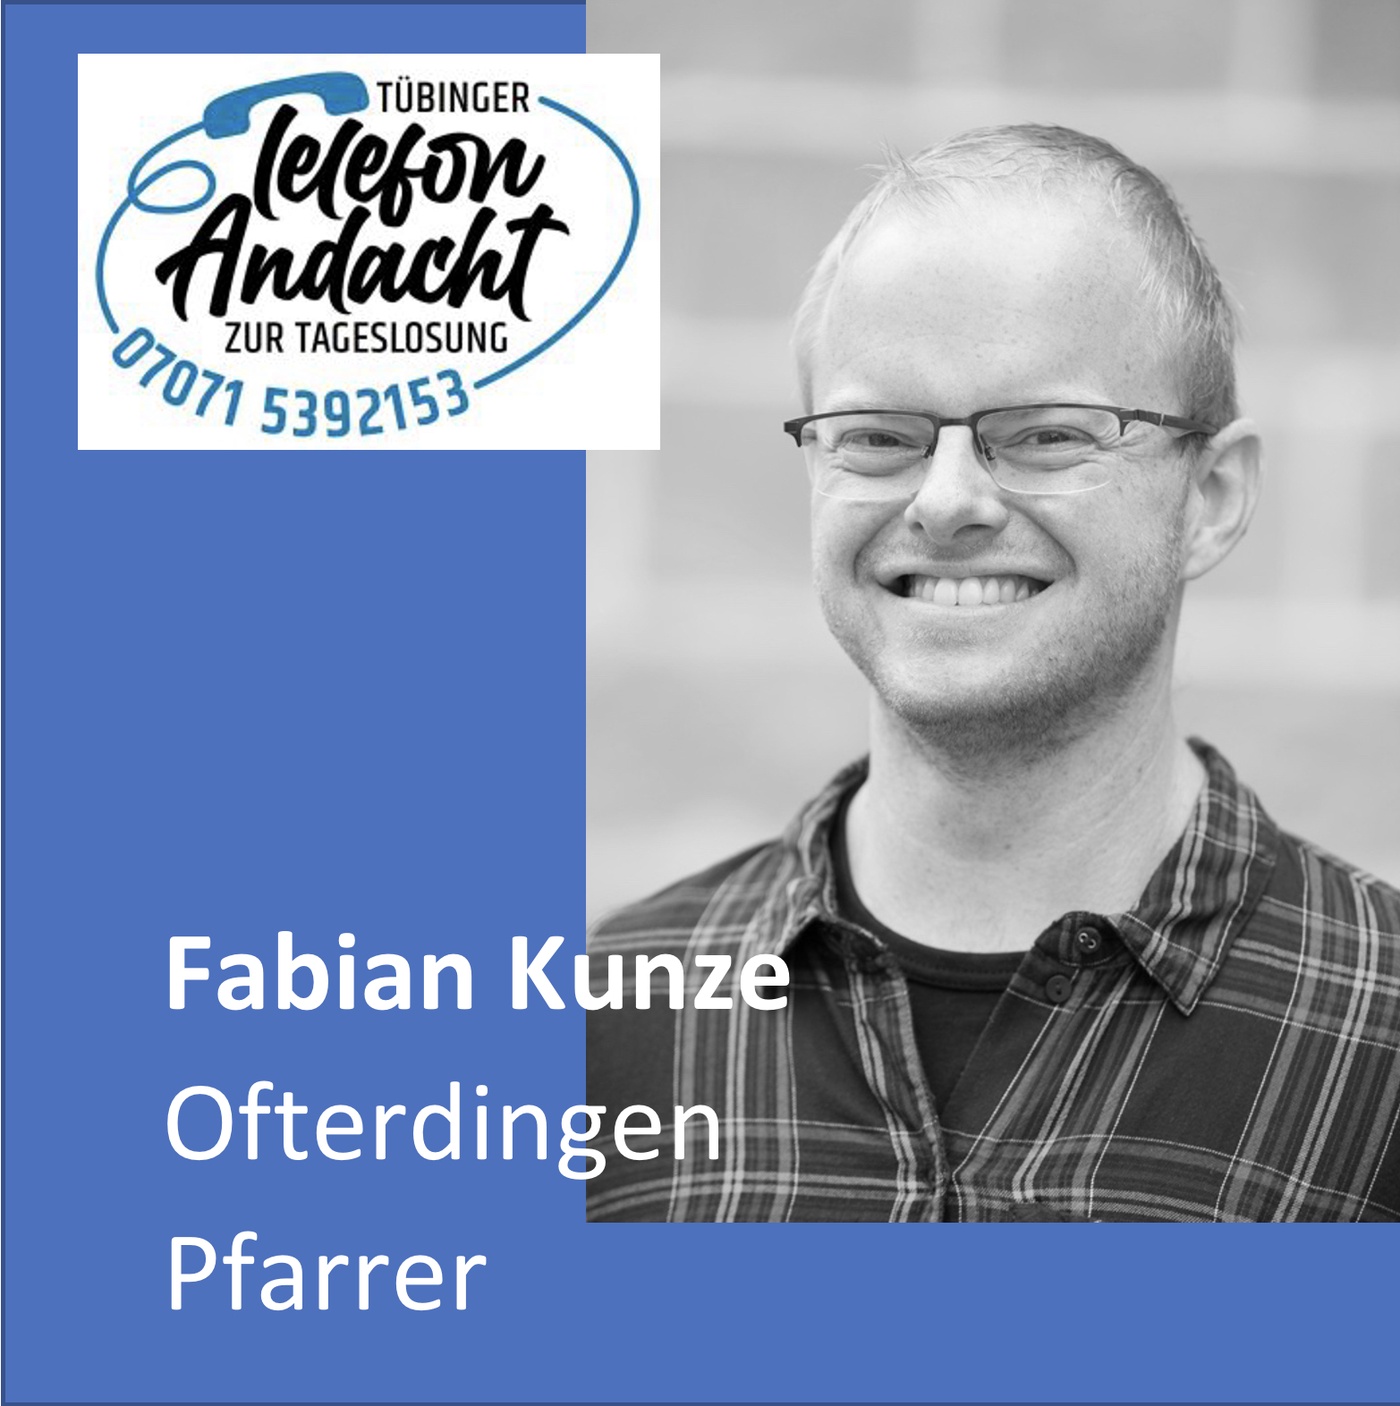 23 03 22 Fabian Kunze